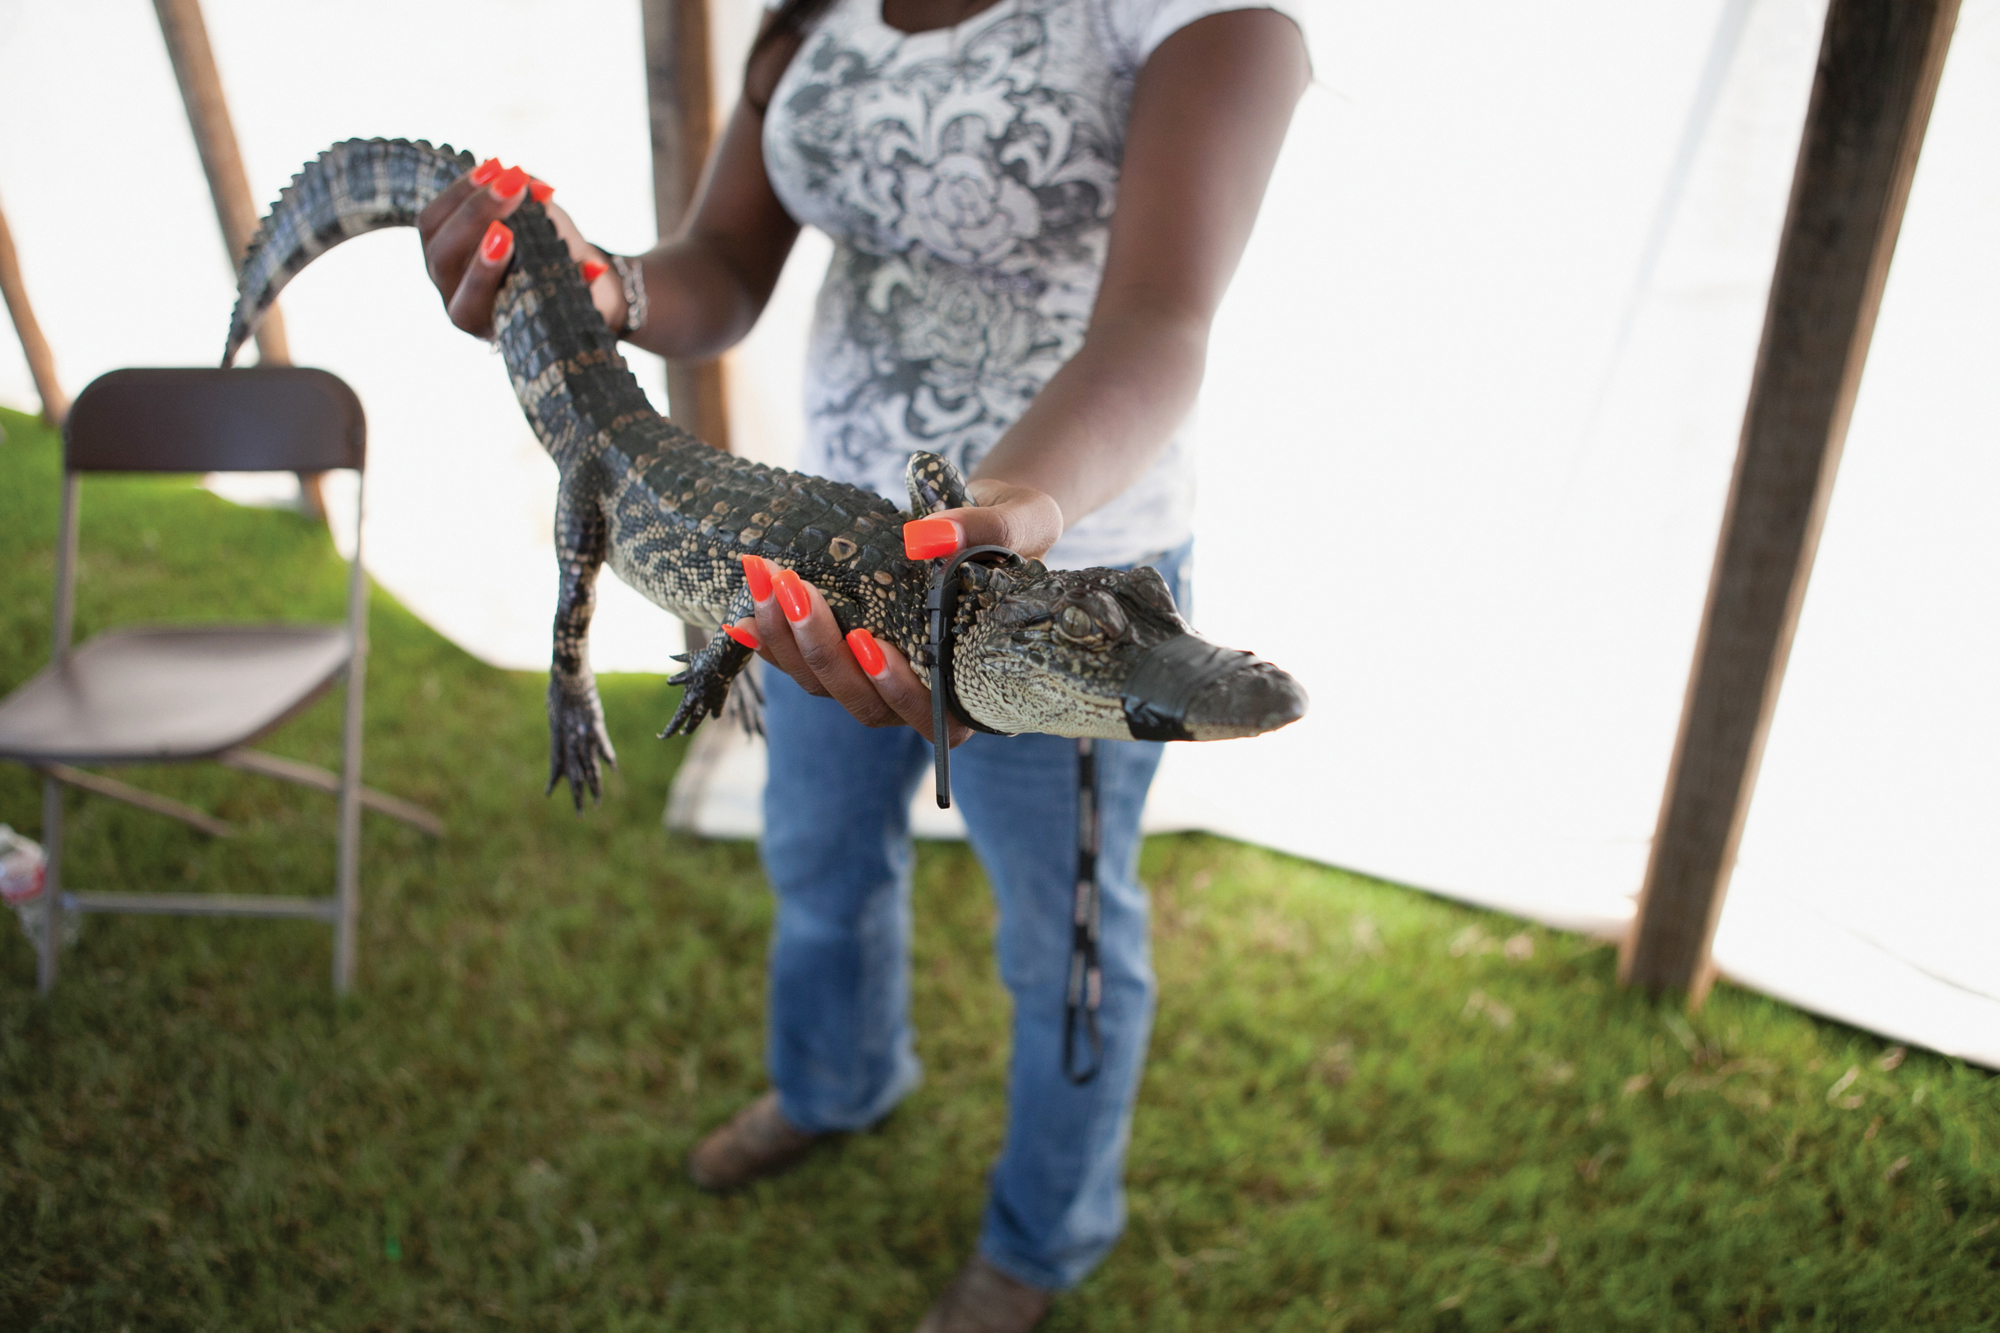 A baby alligator at the 2015 Gatorfest